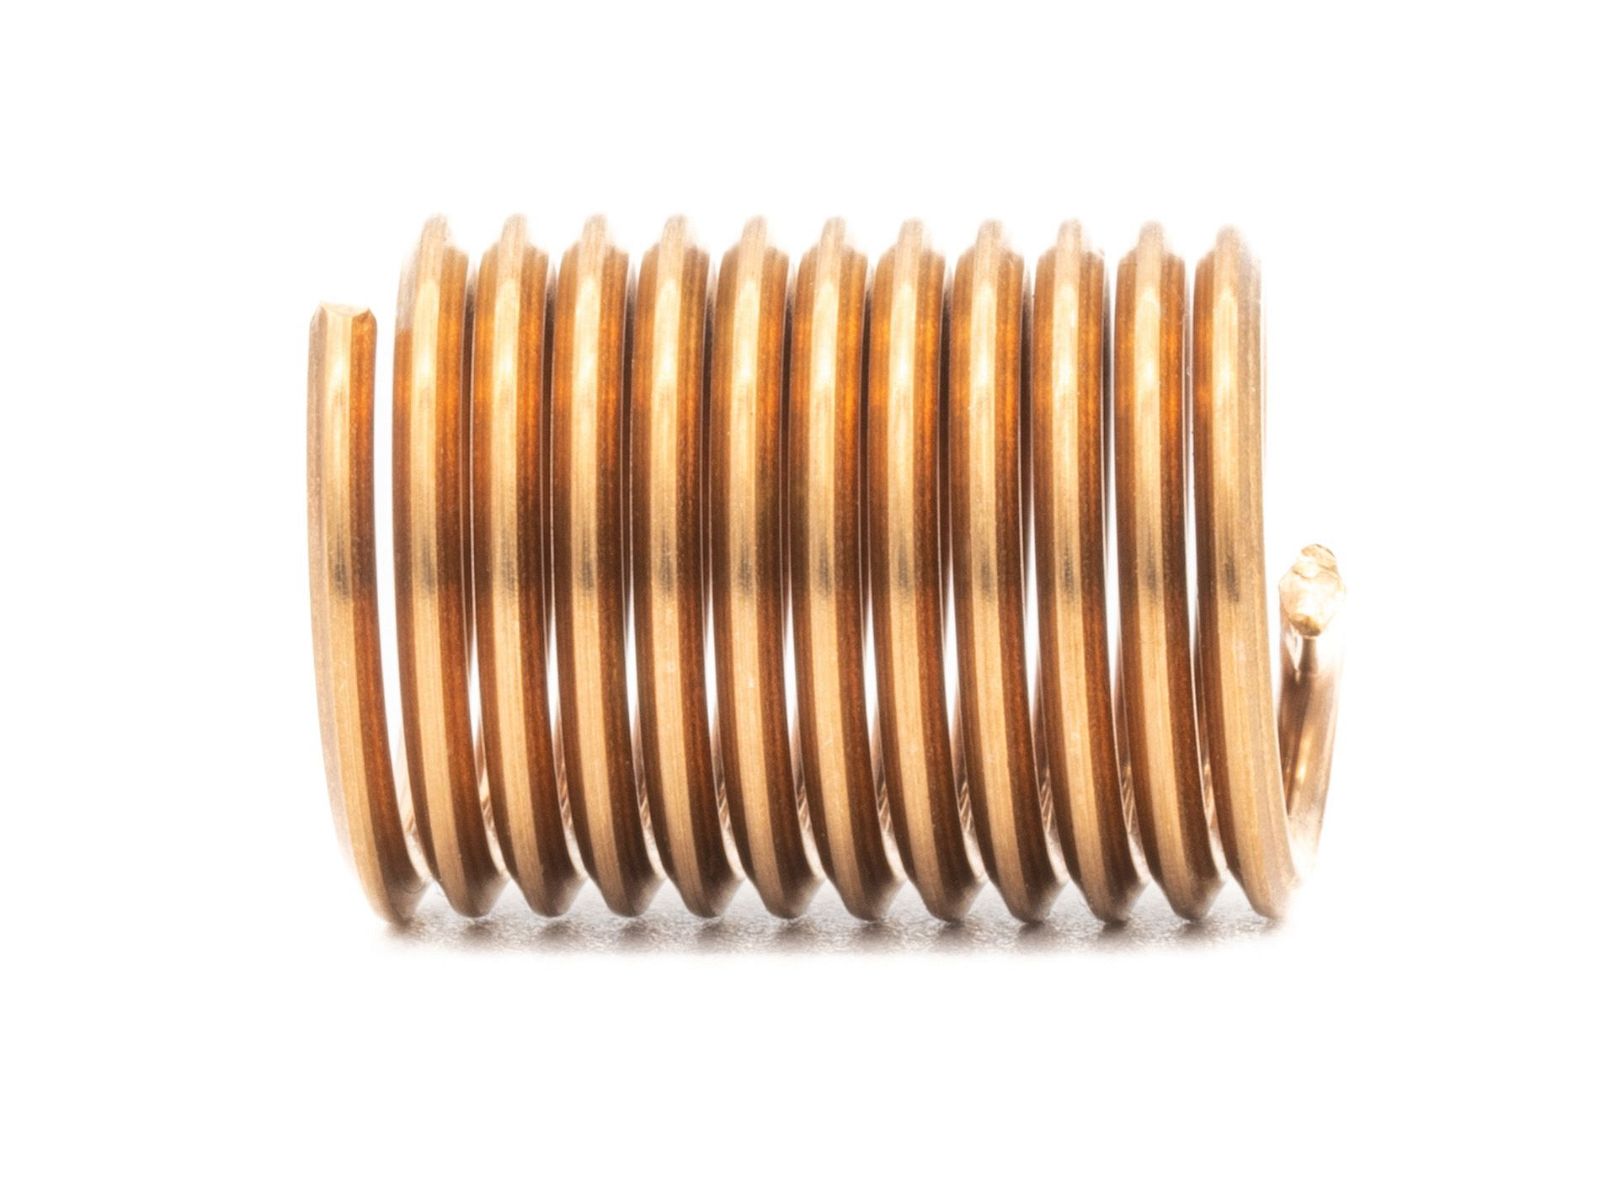 BaerCoil Wire Thread Inserts M 10 x 1.5 - 2.0 D (20 mm) - free running - Bronze - 100 pcs.